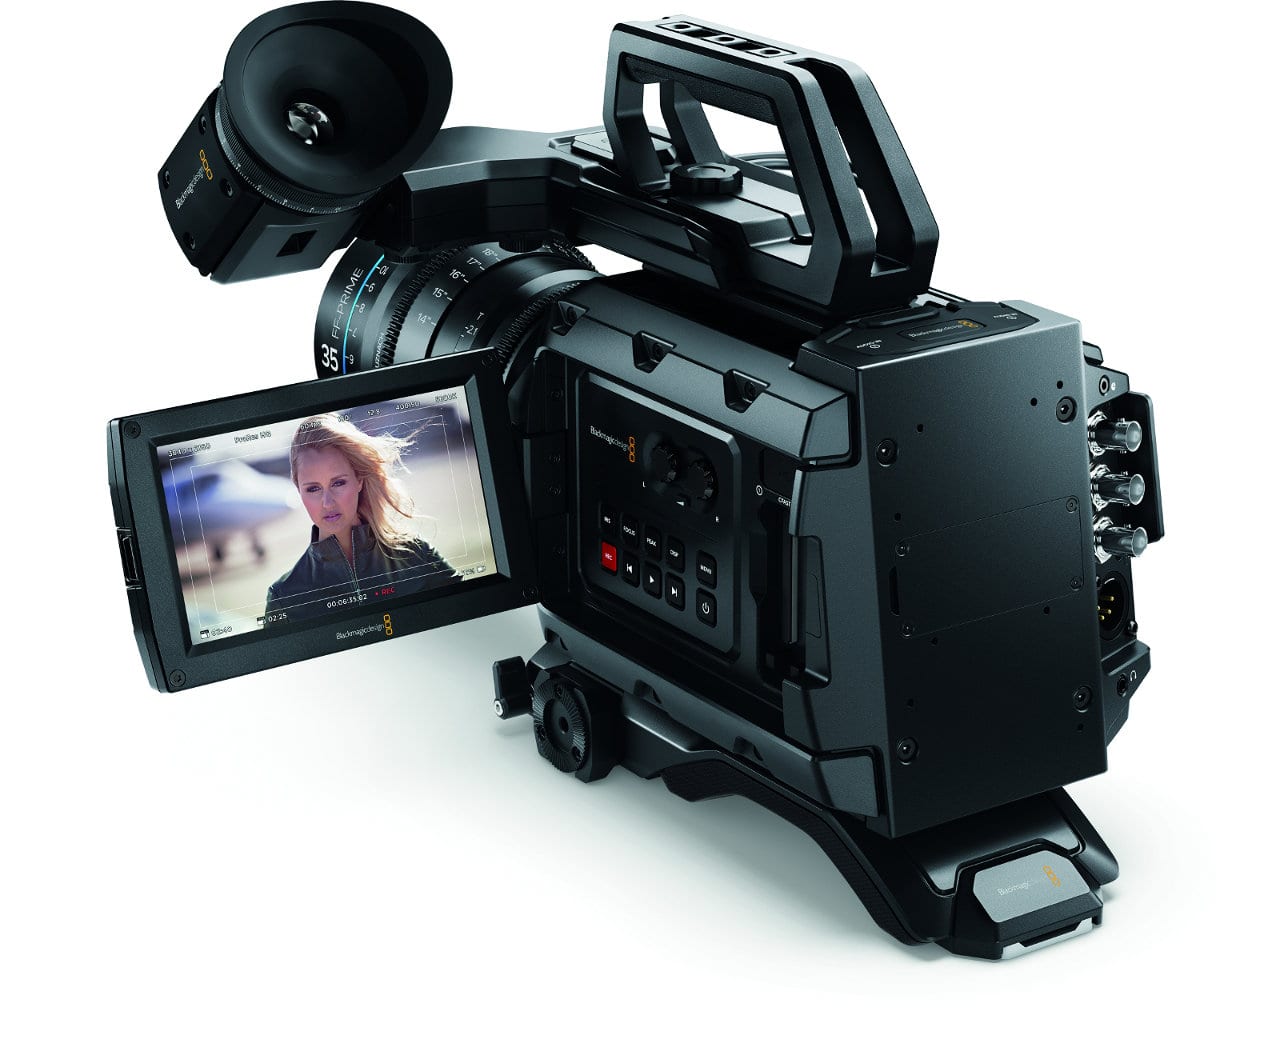 The back of the Blackmagic URSA Mini professional cinema camera.